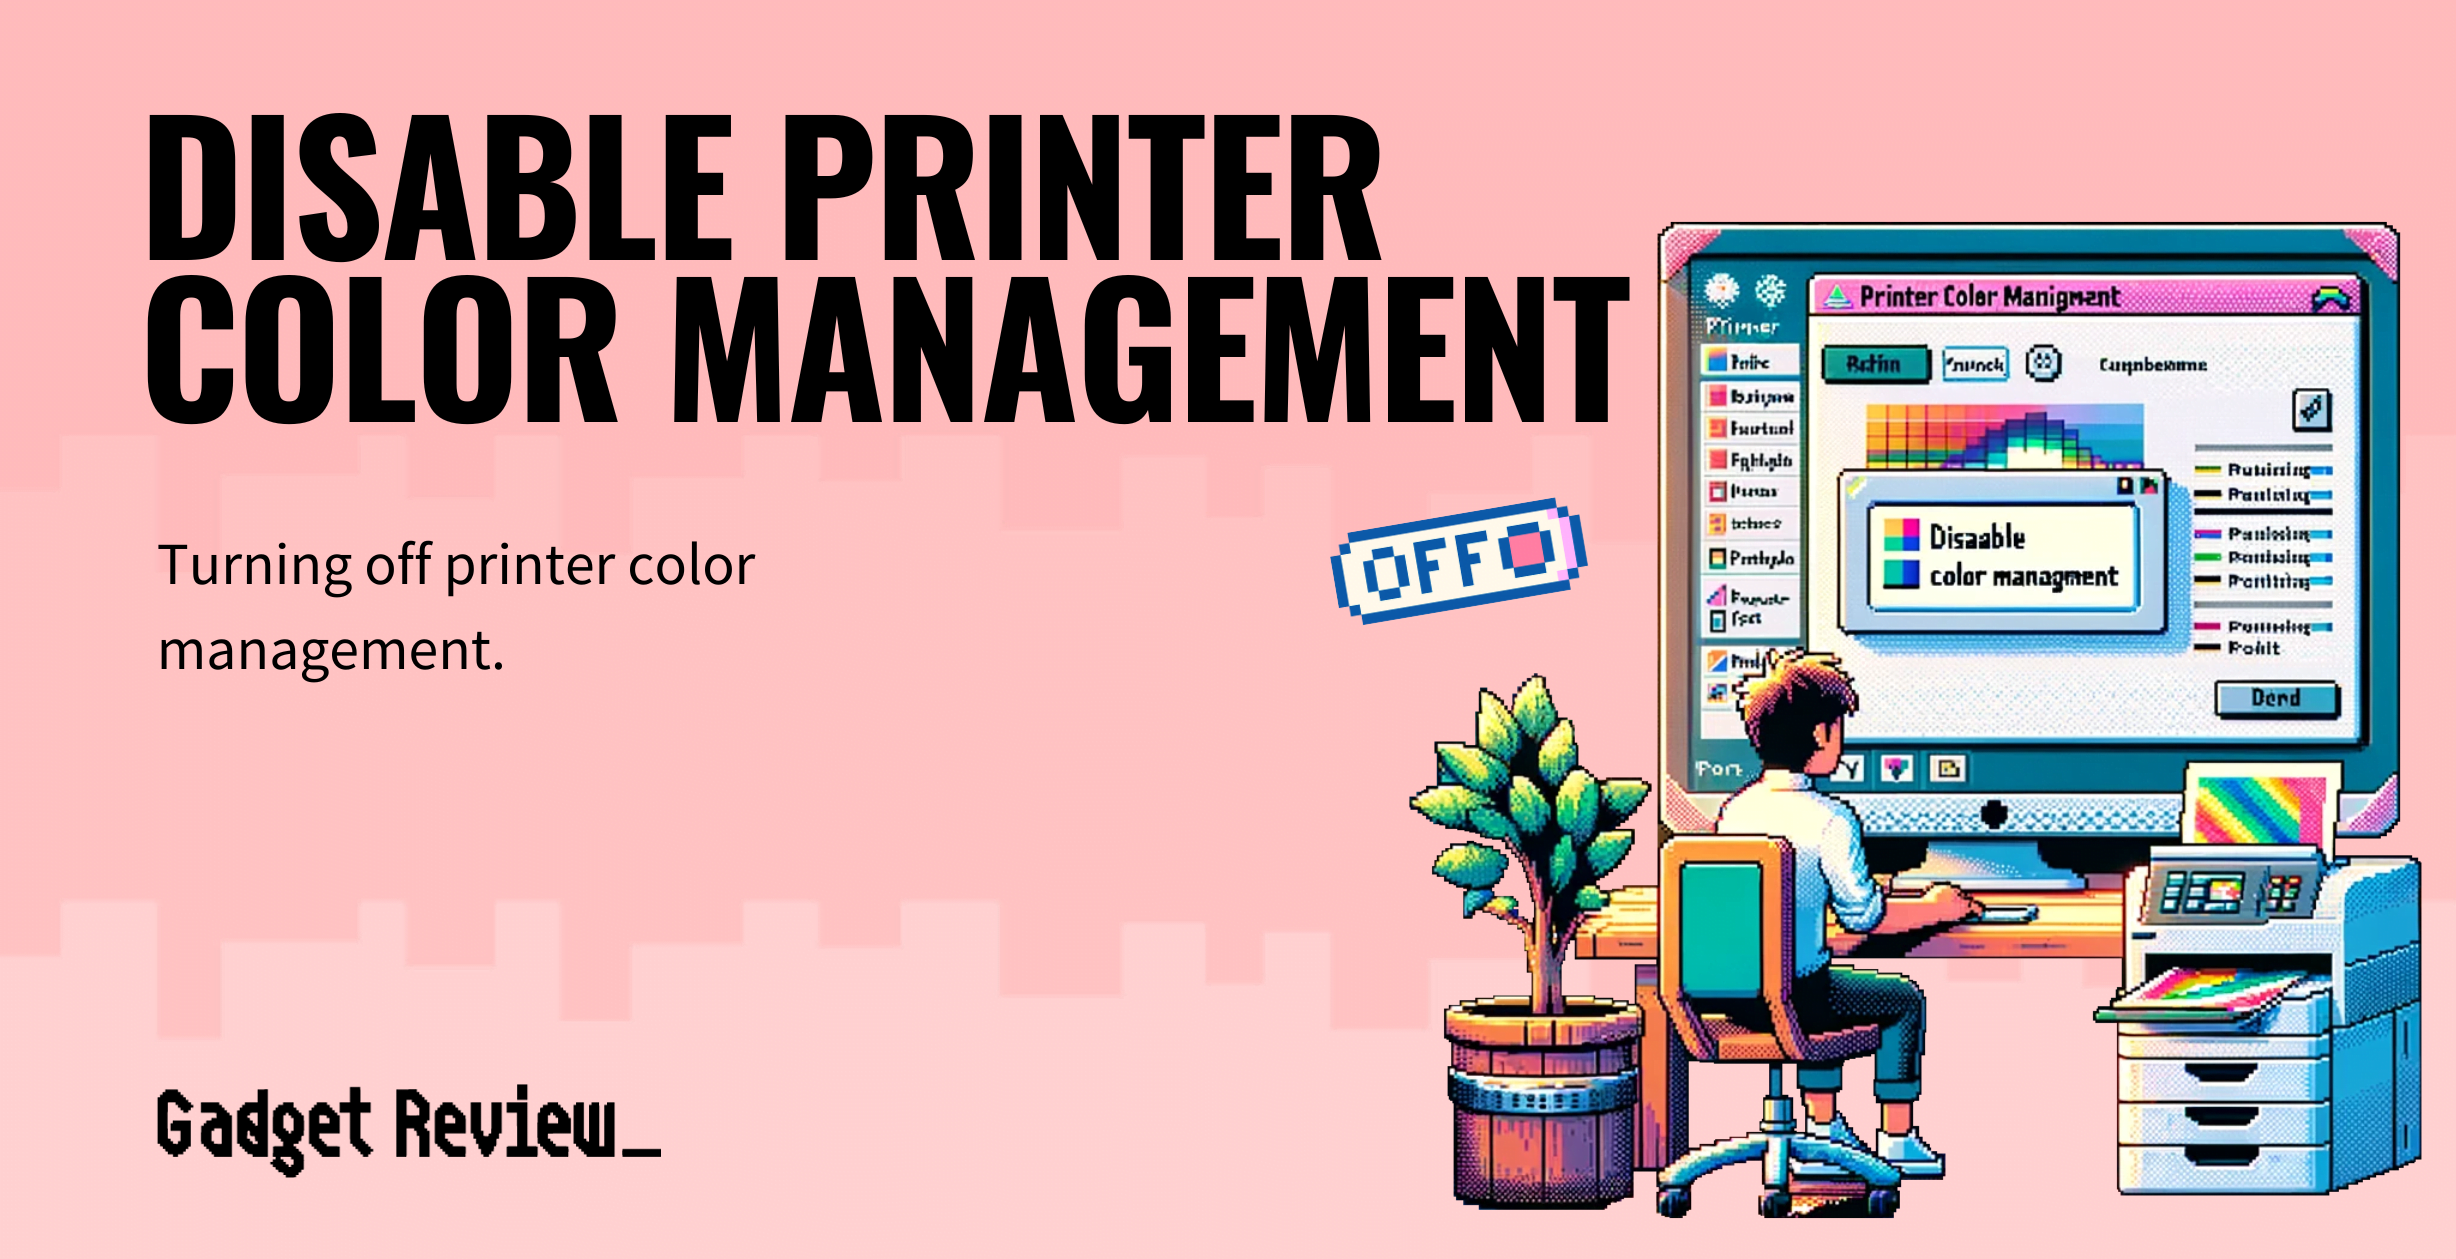 Disabling your Printer’s Color Management Option